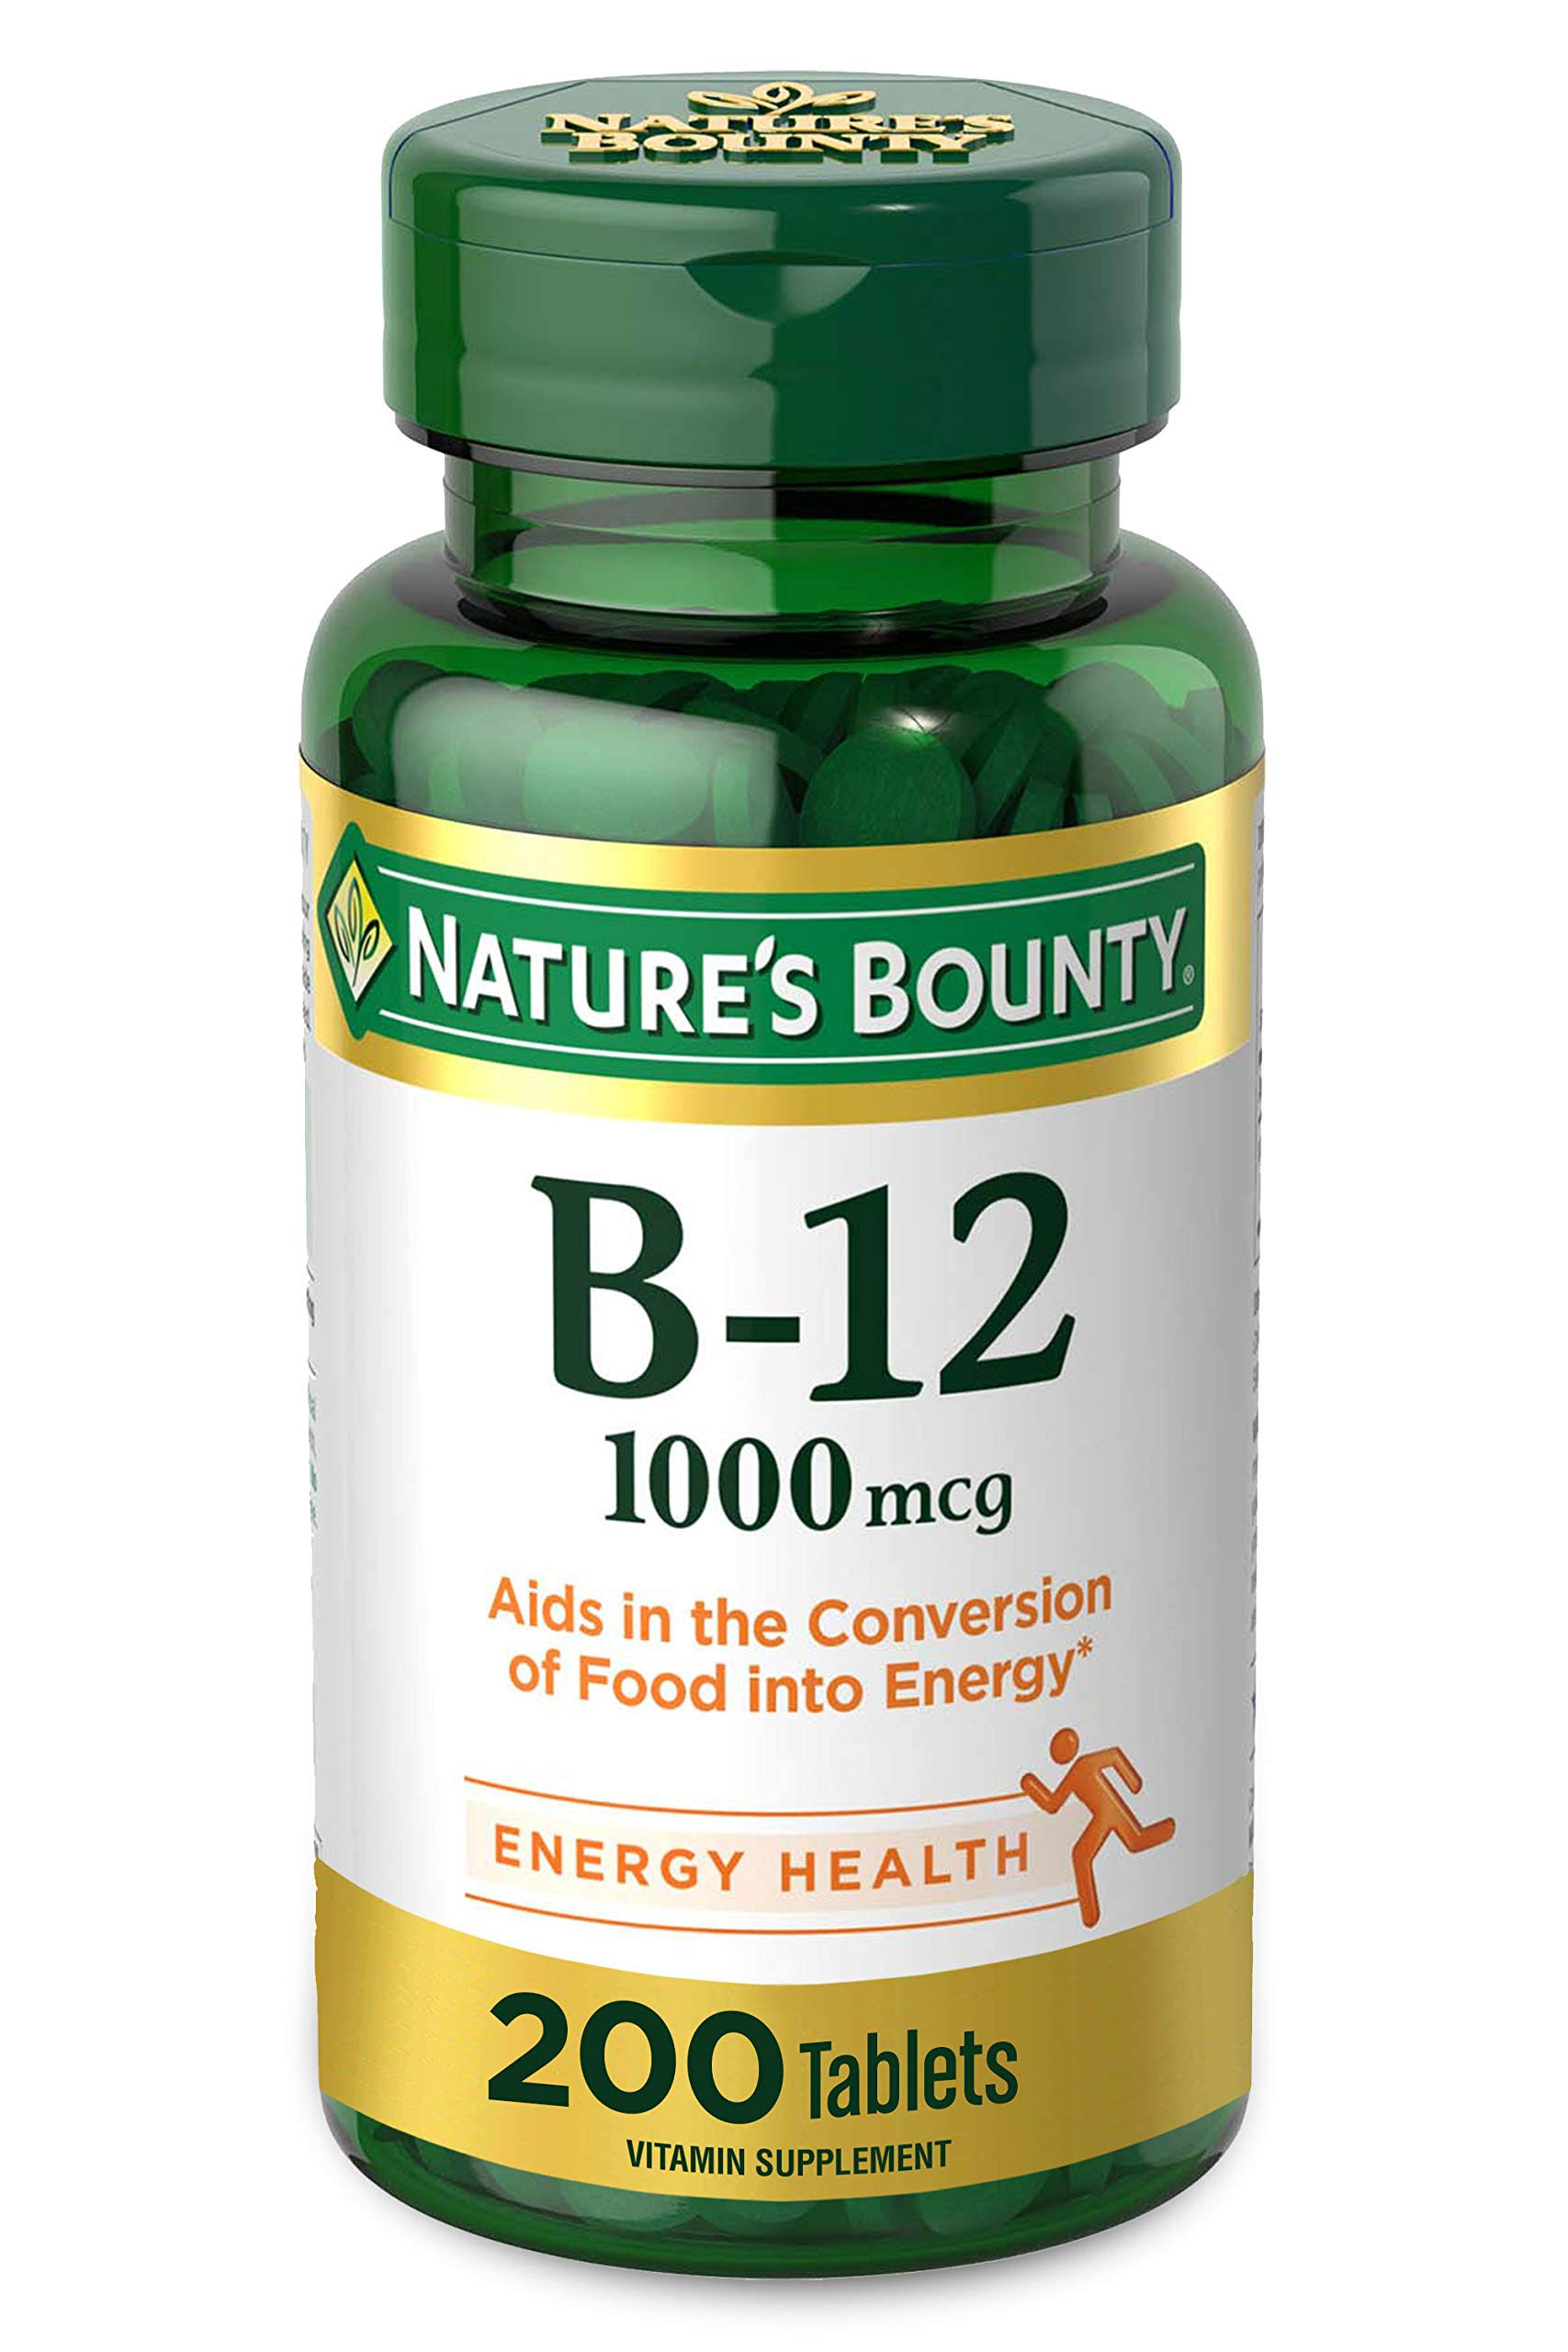 Nature's Bounty Vitamin B-12 Supplement - 1000 Mcg, 200 Count